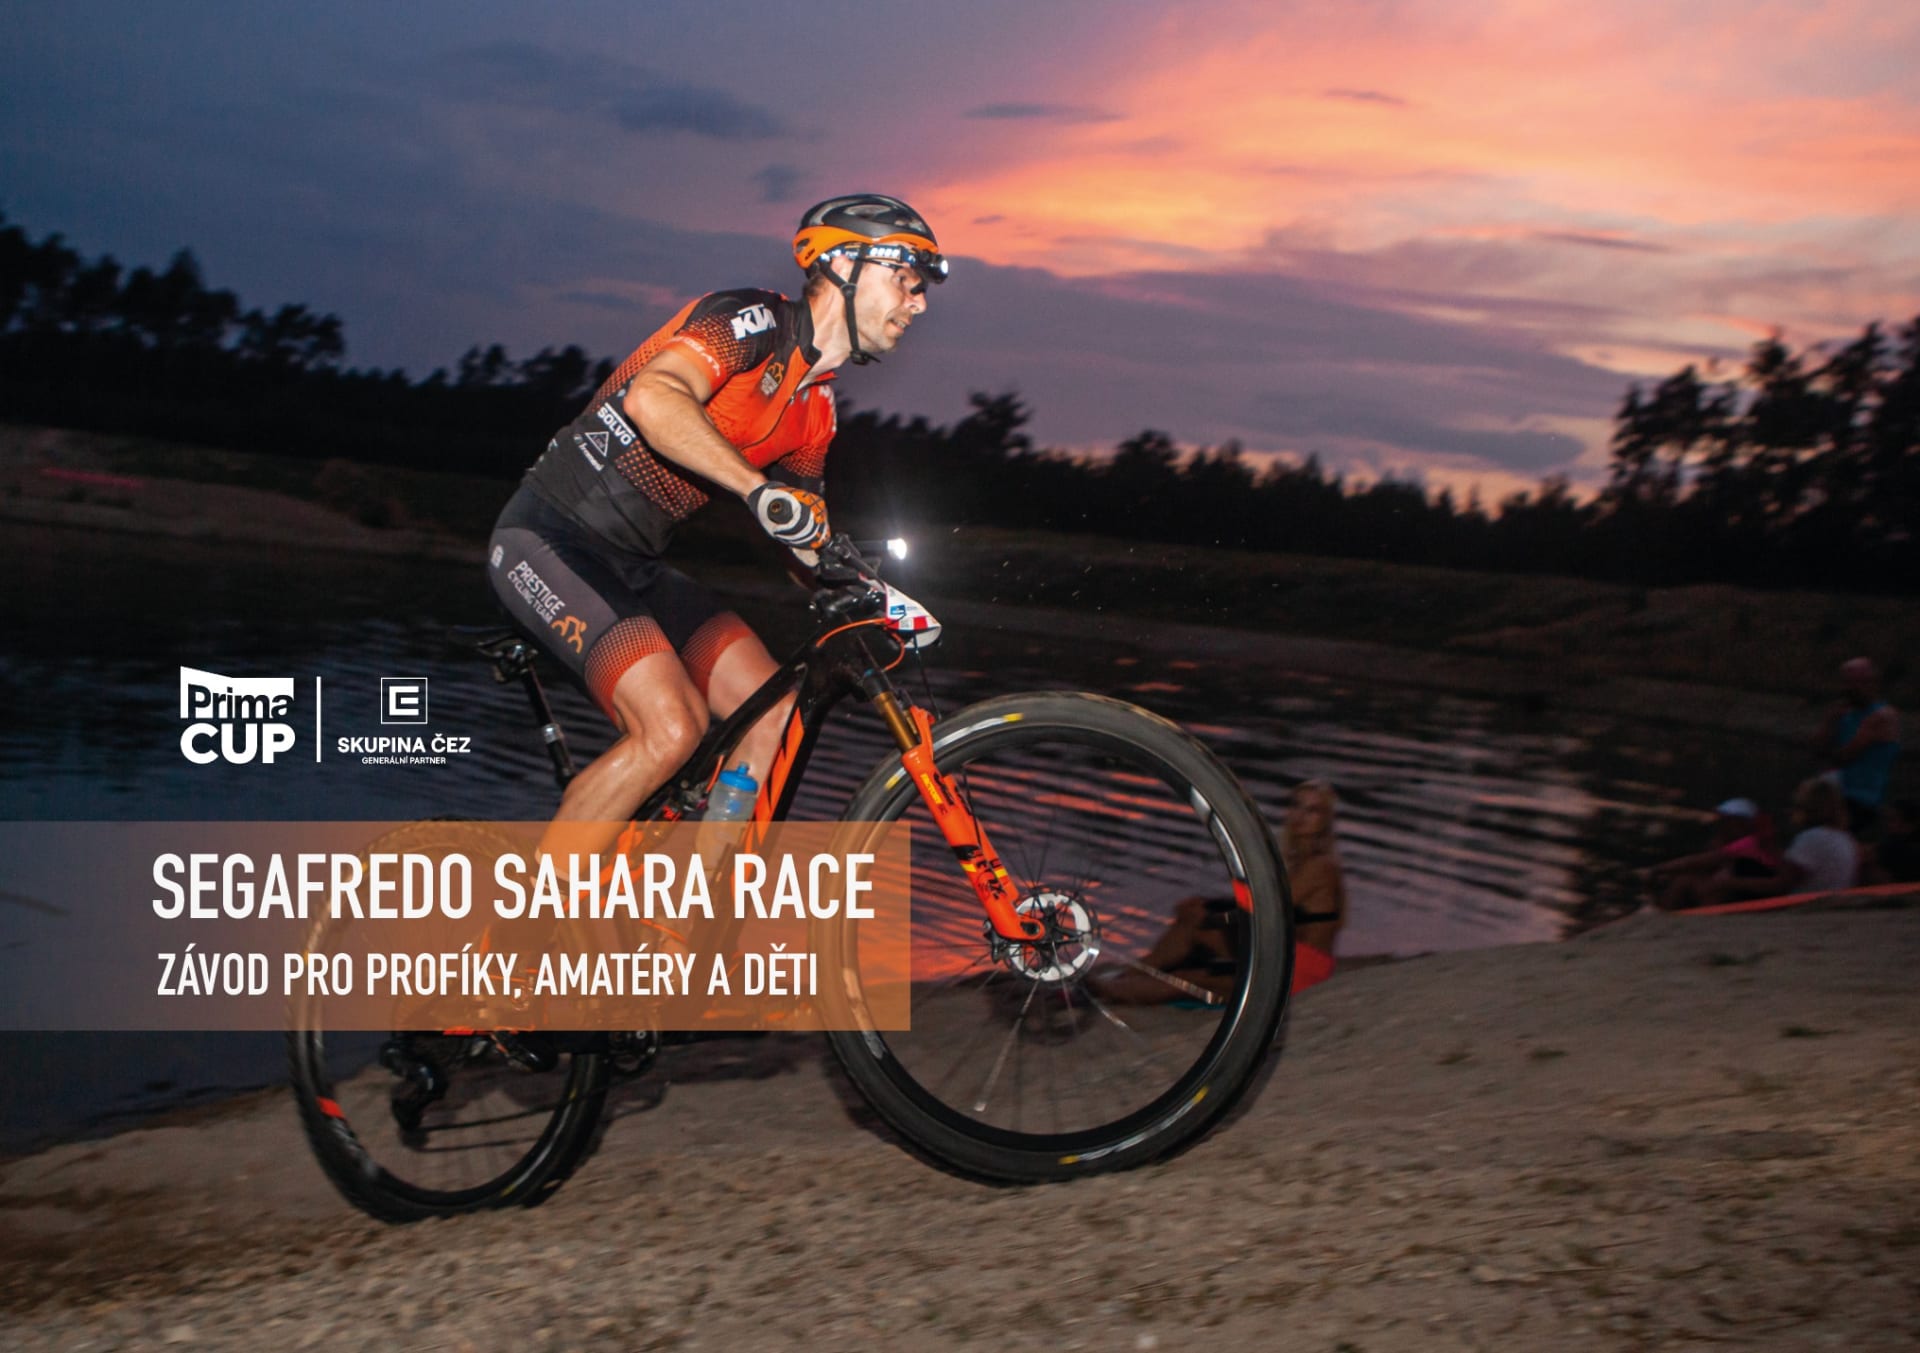 Prima CUP Segafredo Sahara Race